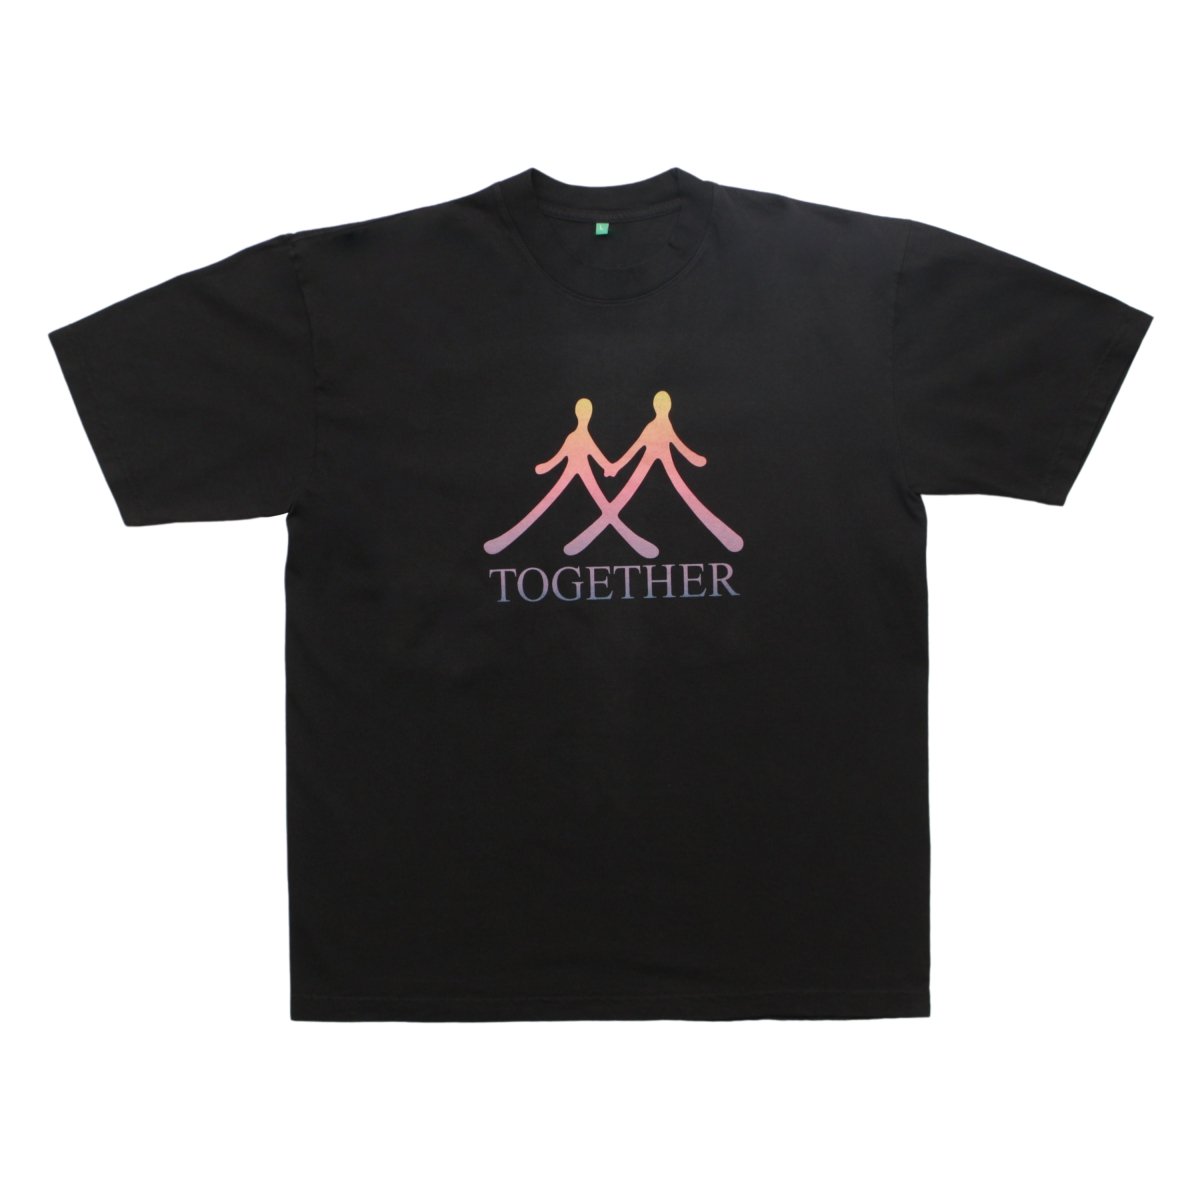  Toghether T-Shirt 【BLACK】